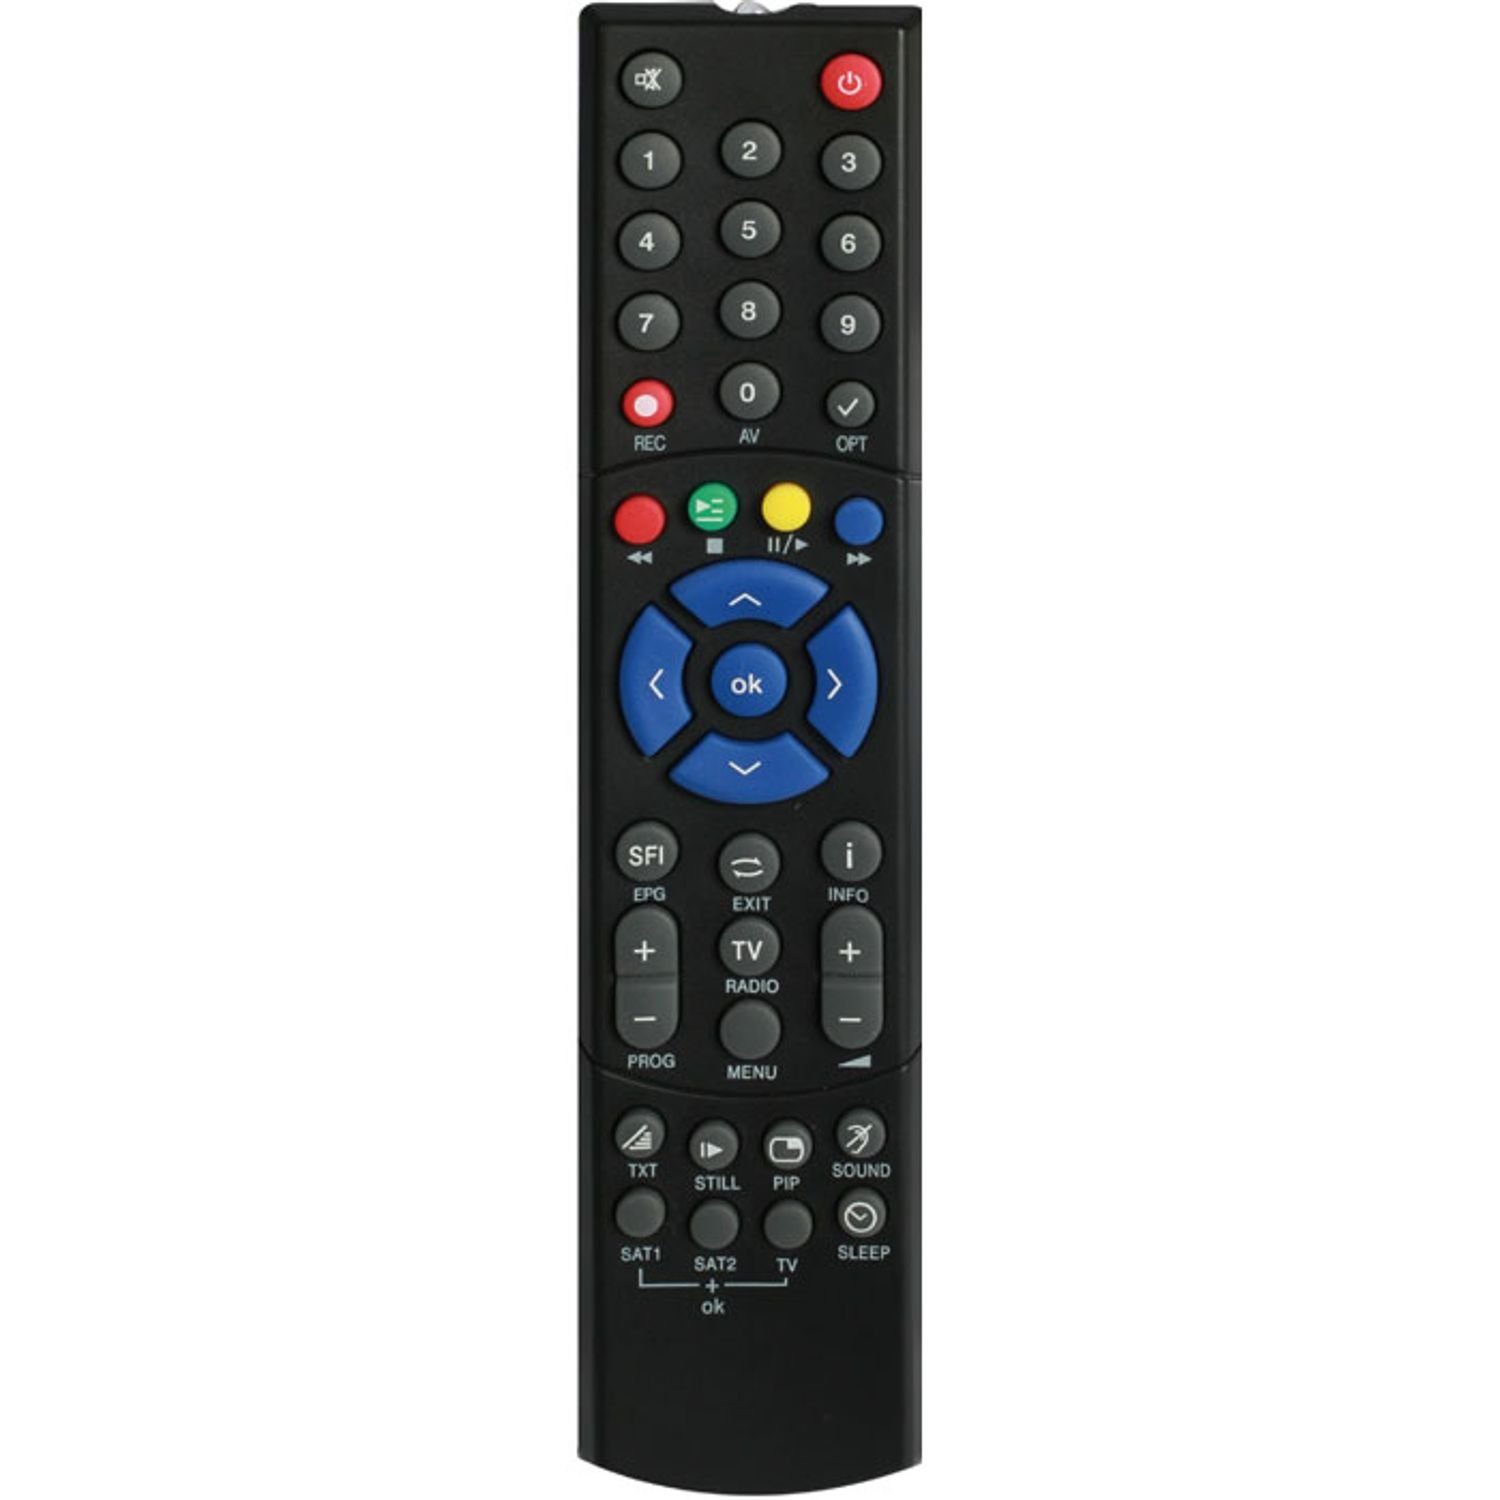 DVB-T2 HD HD/DVB-C Diginova geeignet Receiver DVB-T2 freenet T10 IR Receiver TELESTAR TV